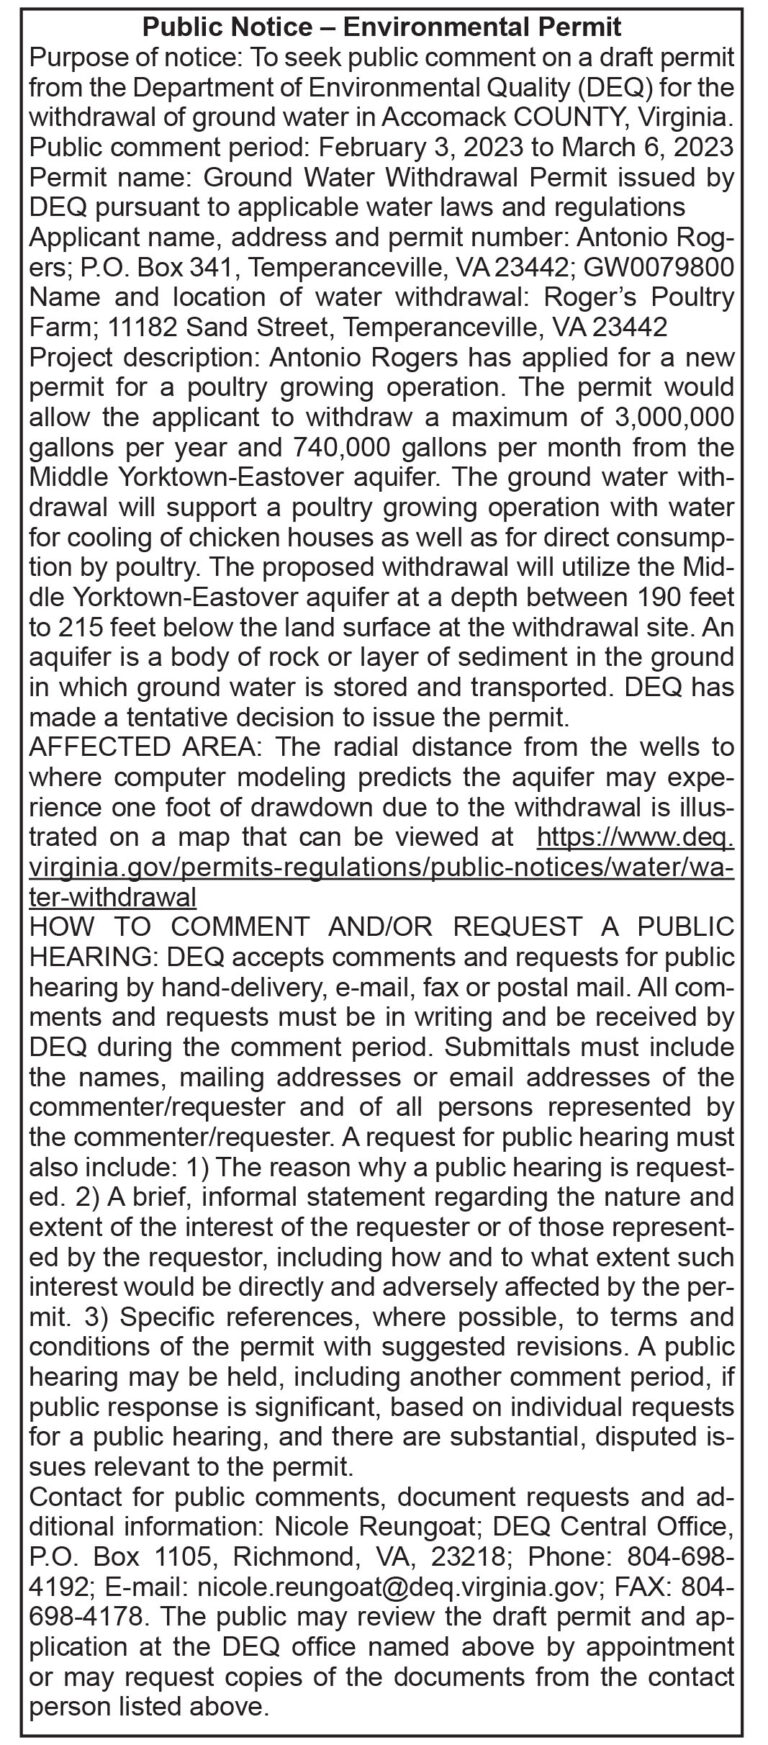 DEQ Public Notice Environmental Permit Rogers 2.3